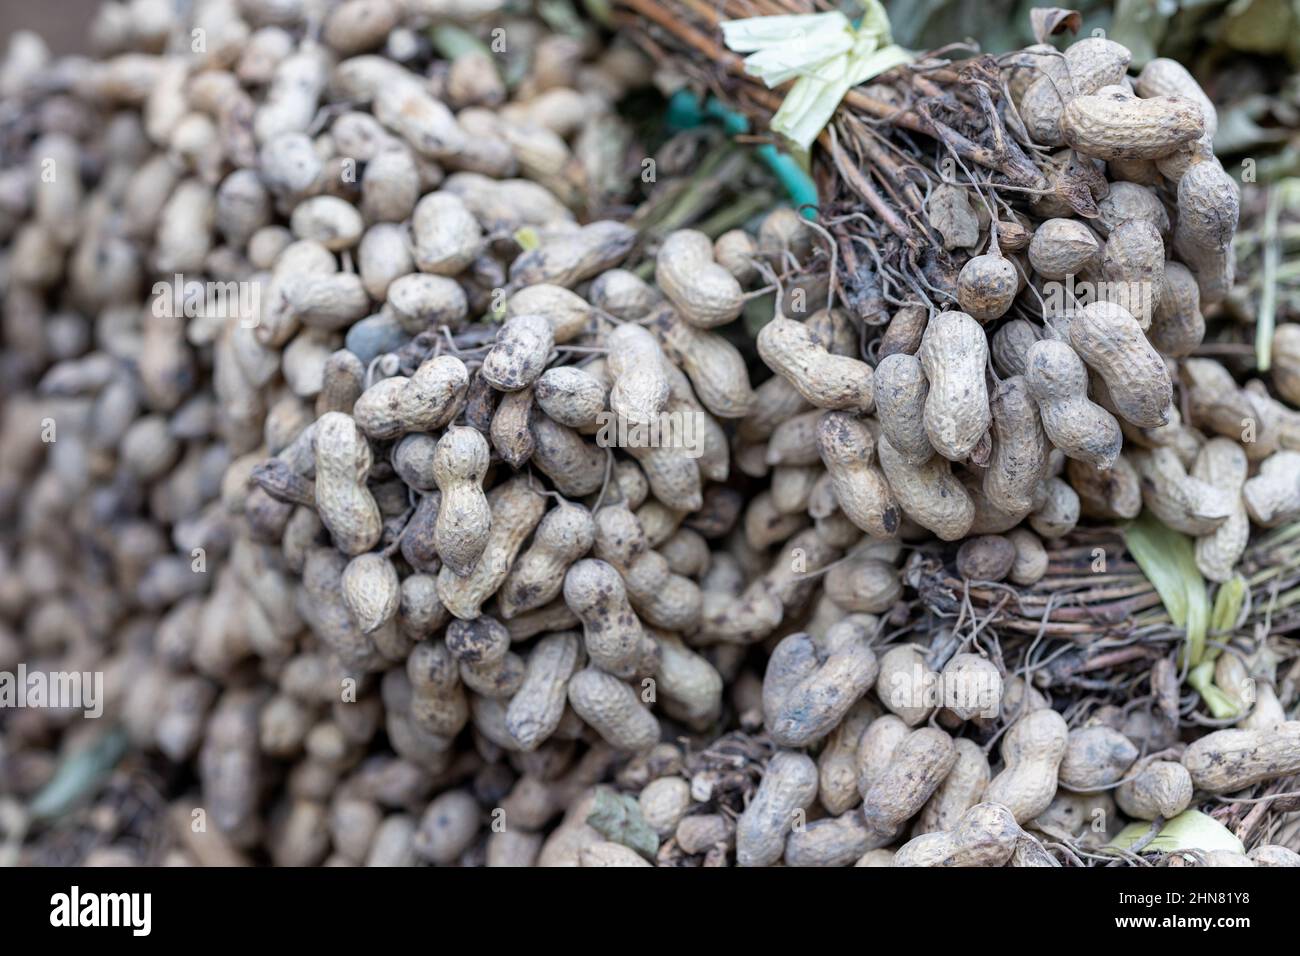 Peanuts (Arachis hypogaea) on the stalk, a legume of the pea family (Fabaceae). Stock Photo